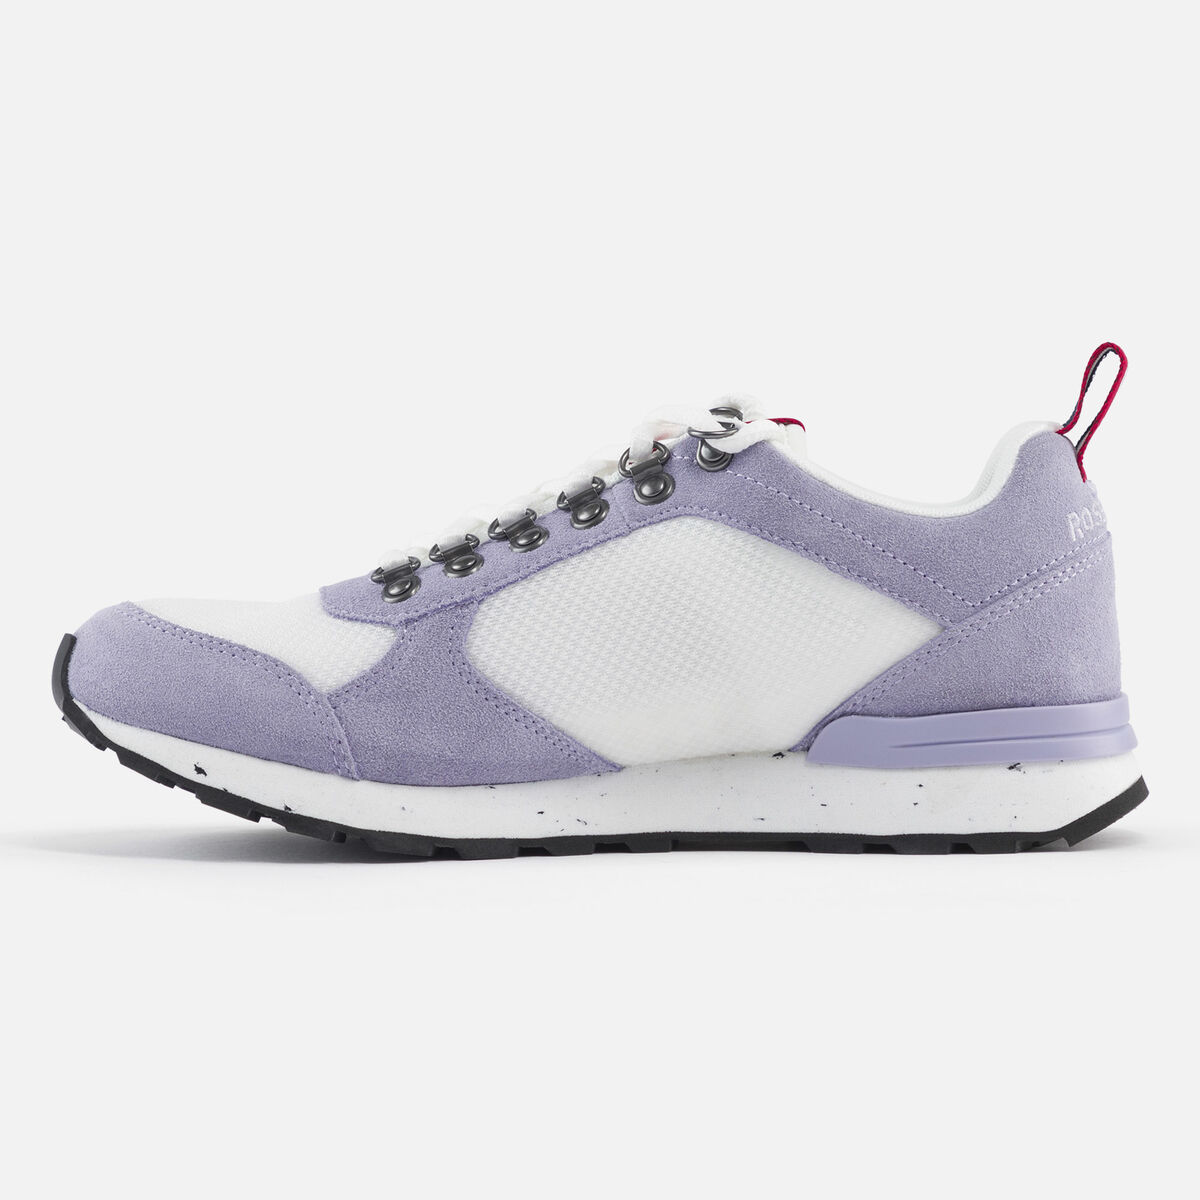 Men's Heritage Special lavender sneakers